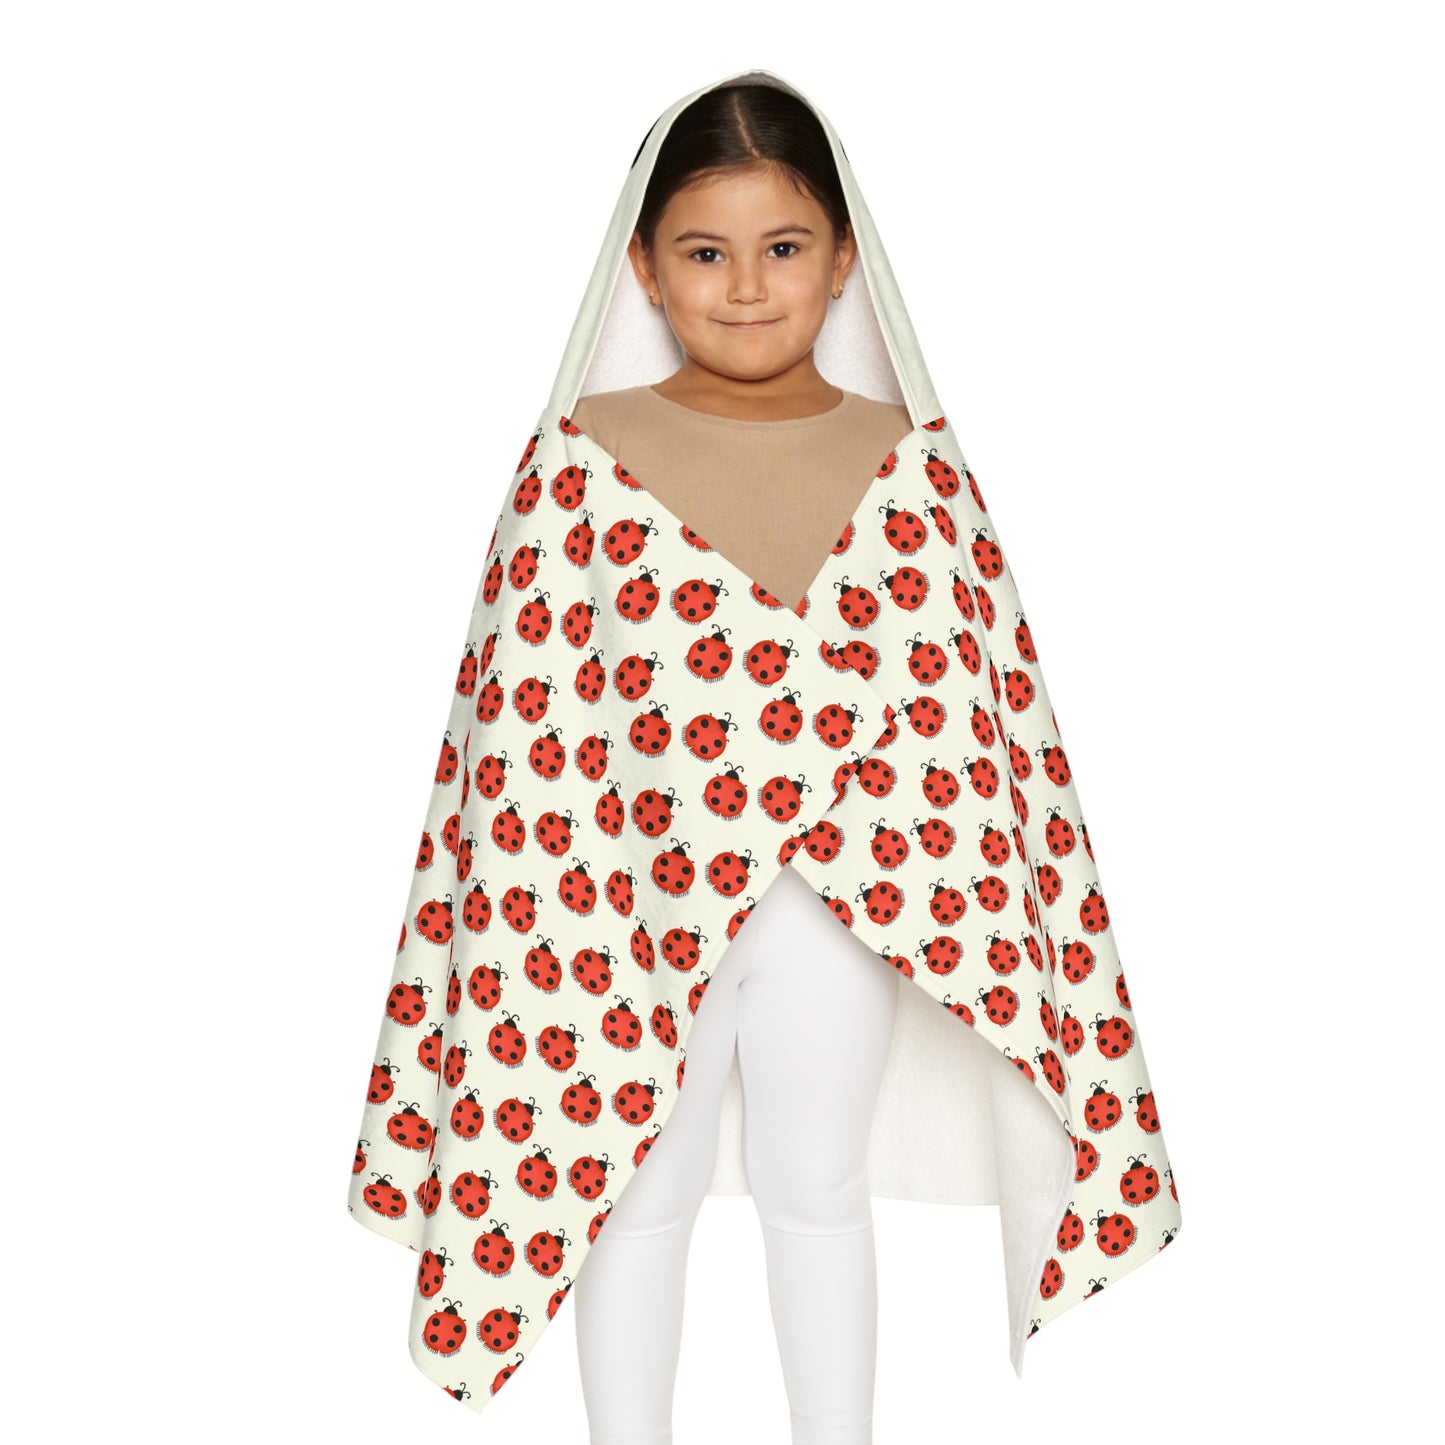 Ladybug Personalized Kids Hooded Towel, Ladybug Pattern, Youth Hooded Towel, Personalized Gift, Ladybug Towel with Name, Hooded Name Towel